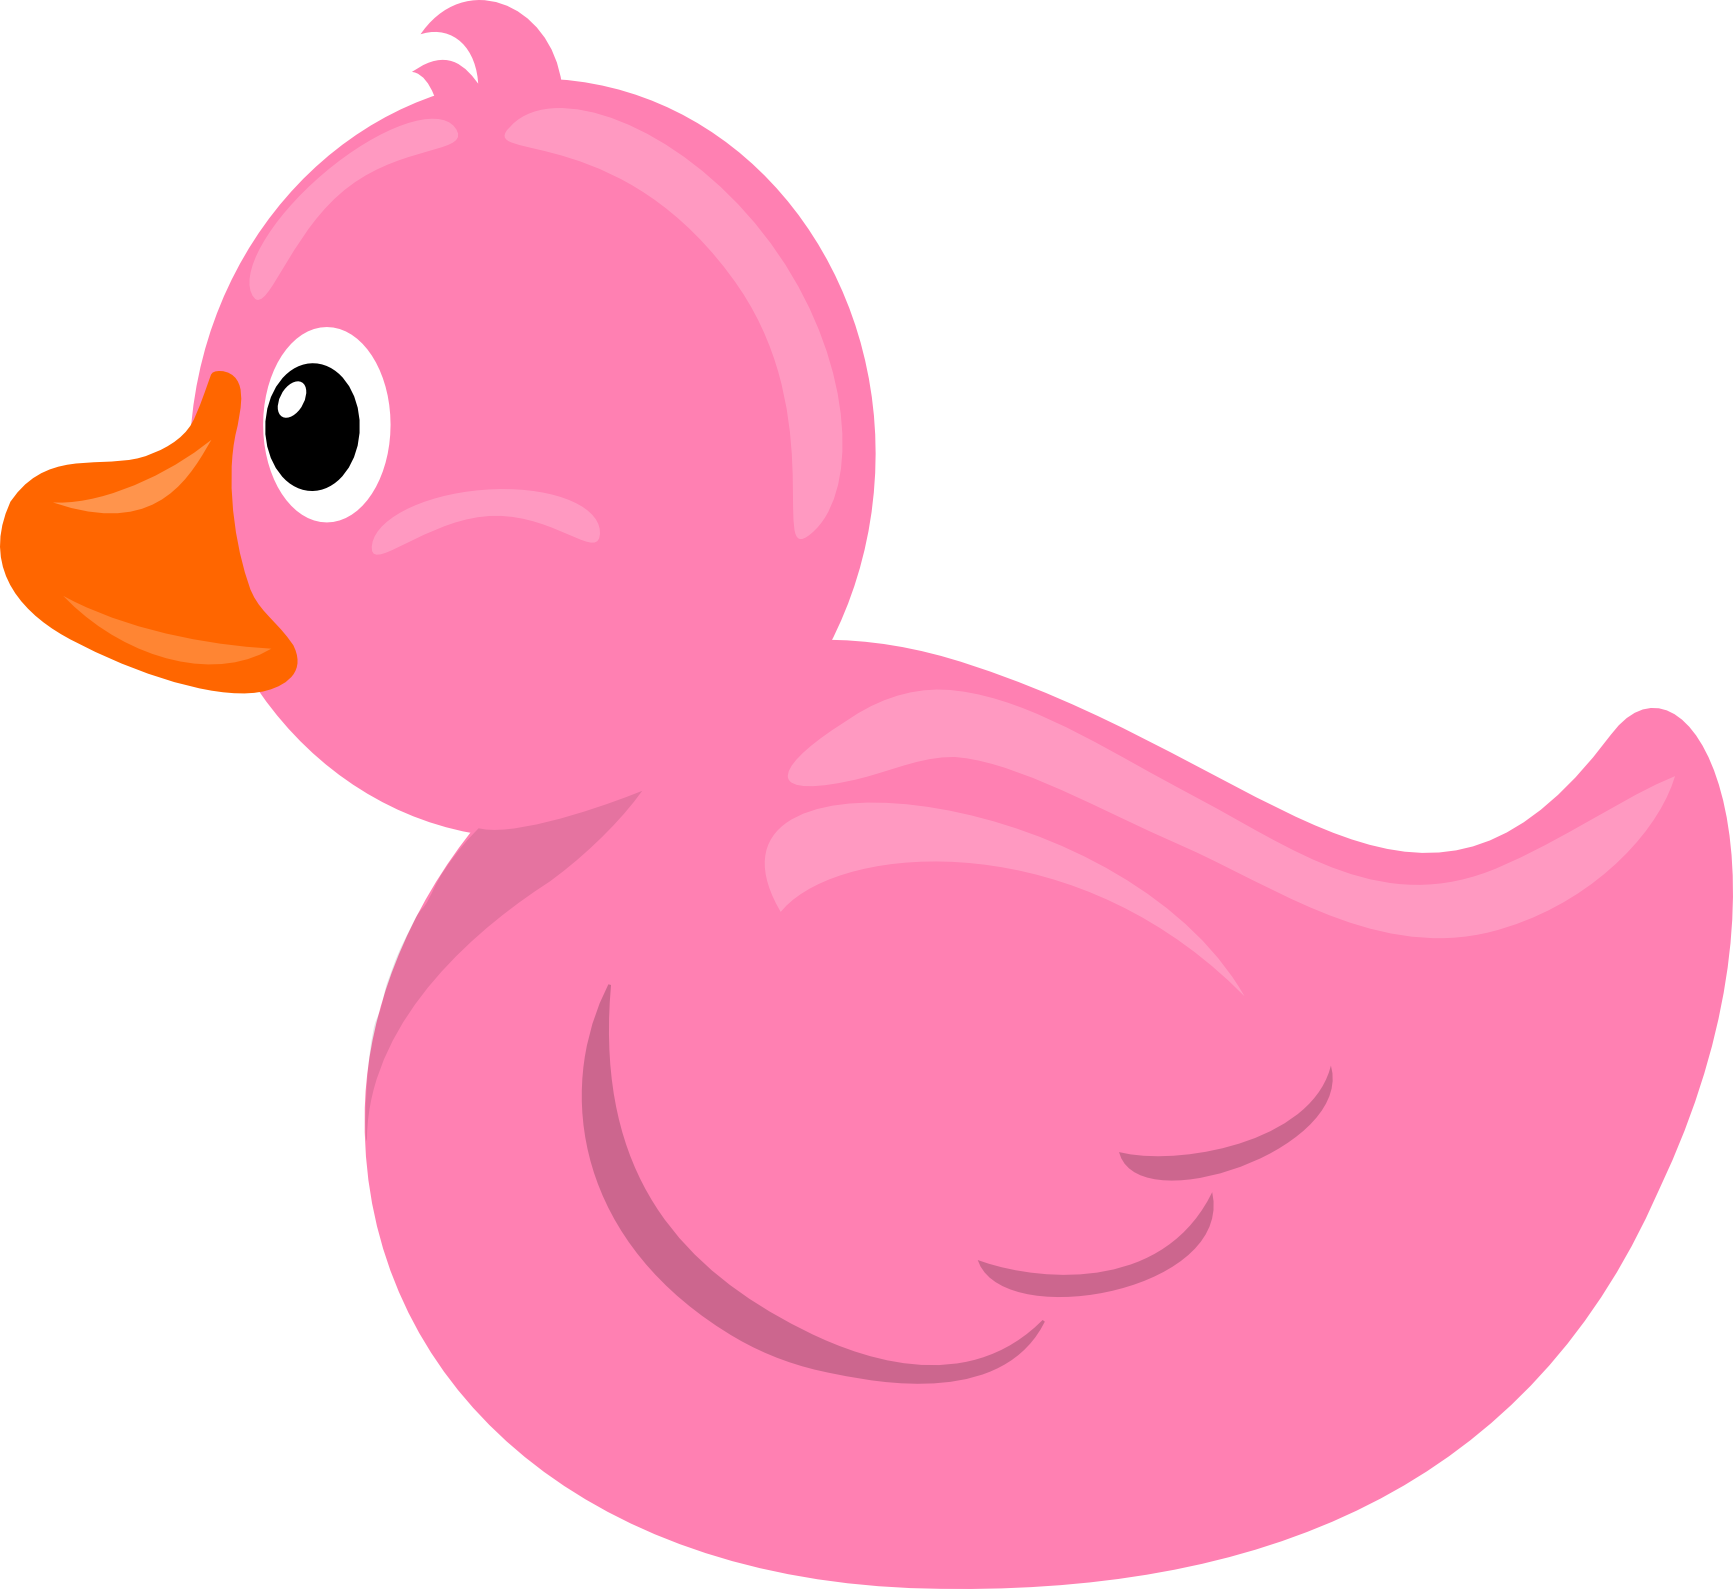 Goose clipart duckling. Rubber duck stormdesignz pink